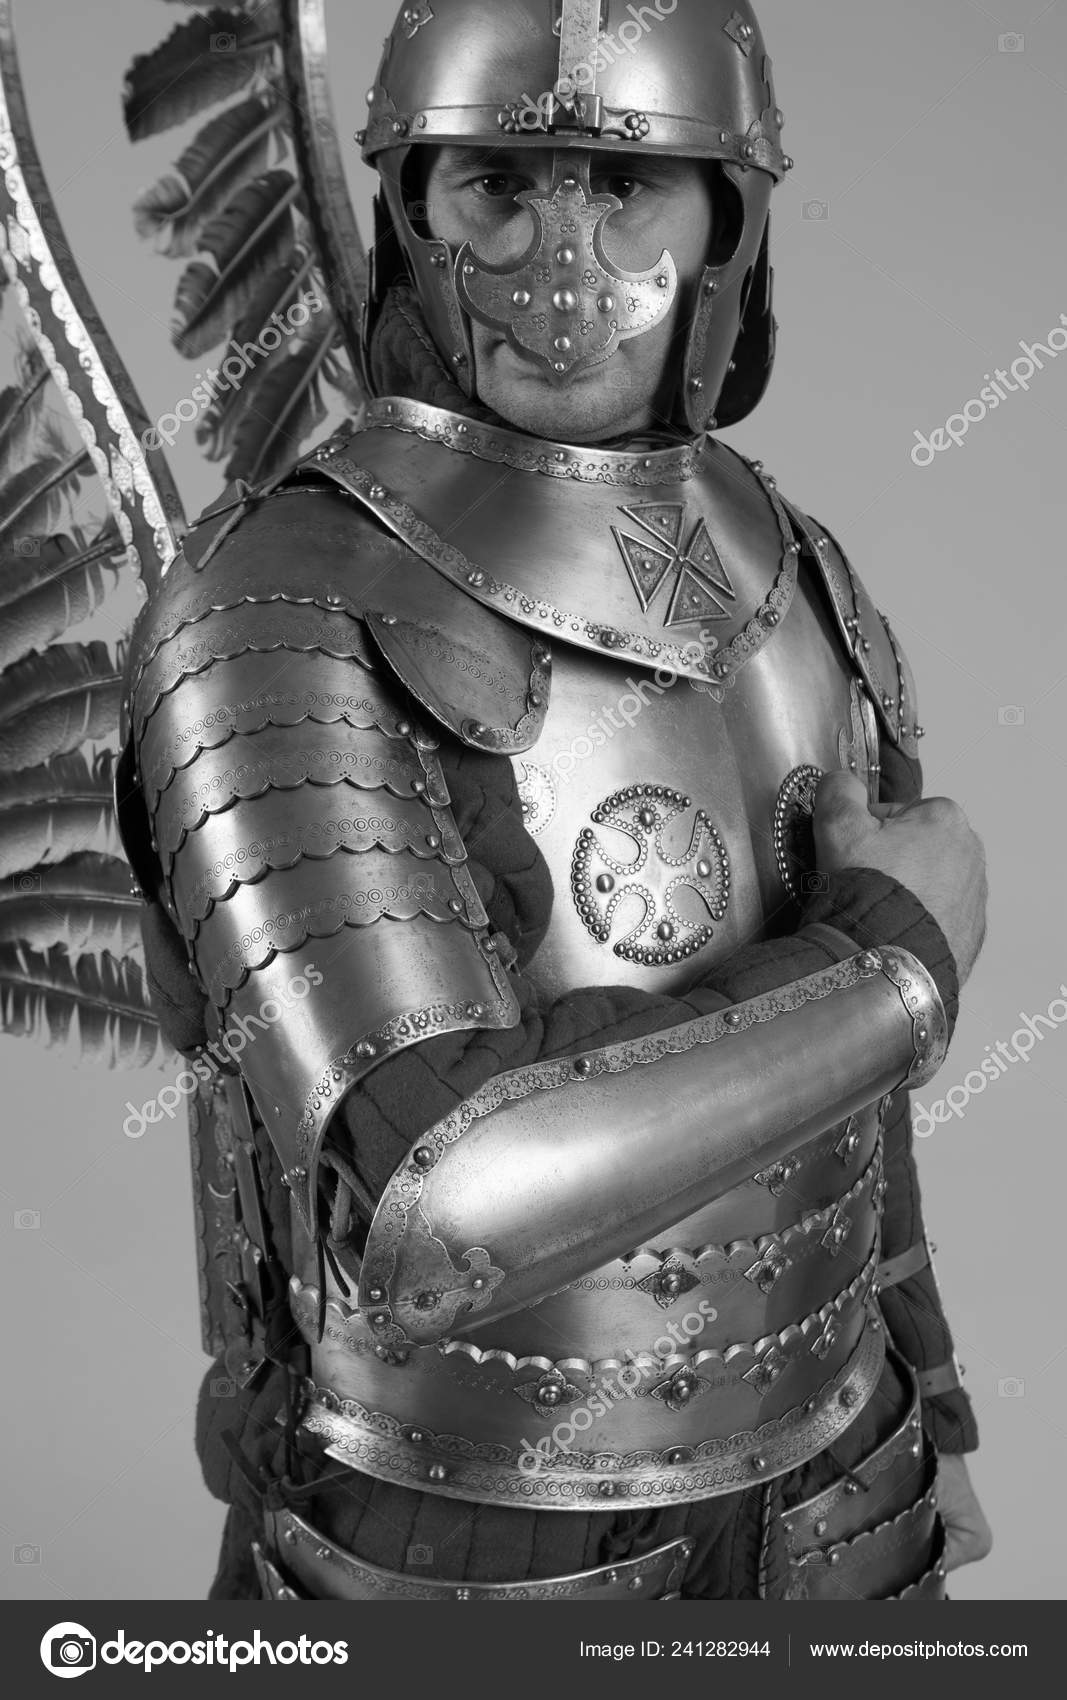 depositphotos_241282944-stock-photo-man-armor-hussar-legion-posing.jpg